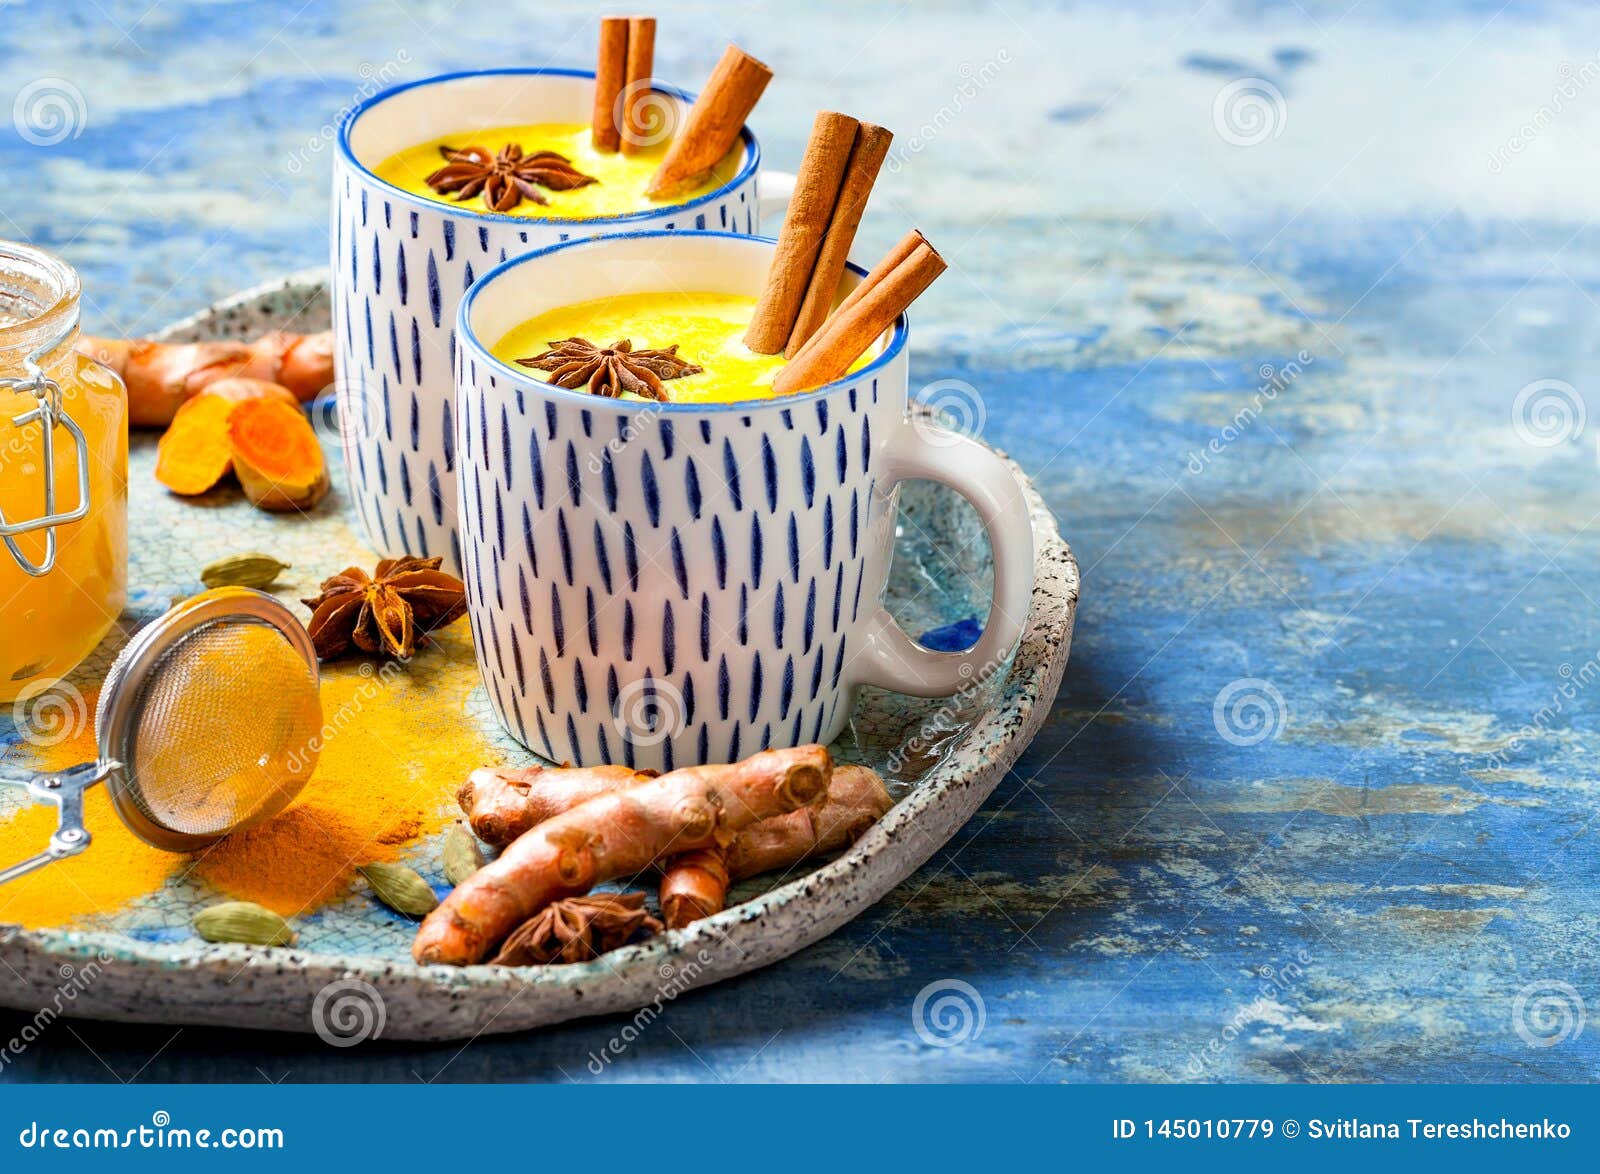 turmeric golden milk latte with cinnamon sticks and honey. detox, immune boosting, anti inflammatory healthy cozy drink.